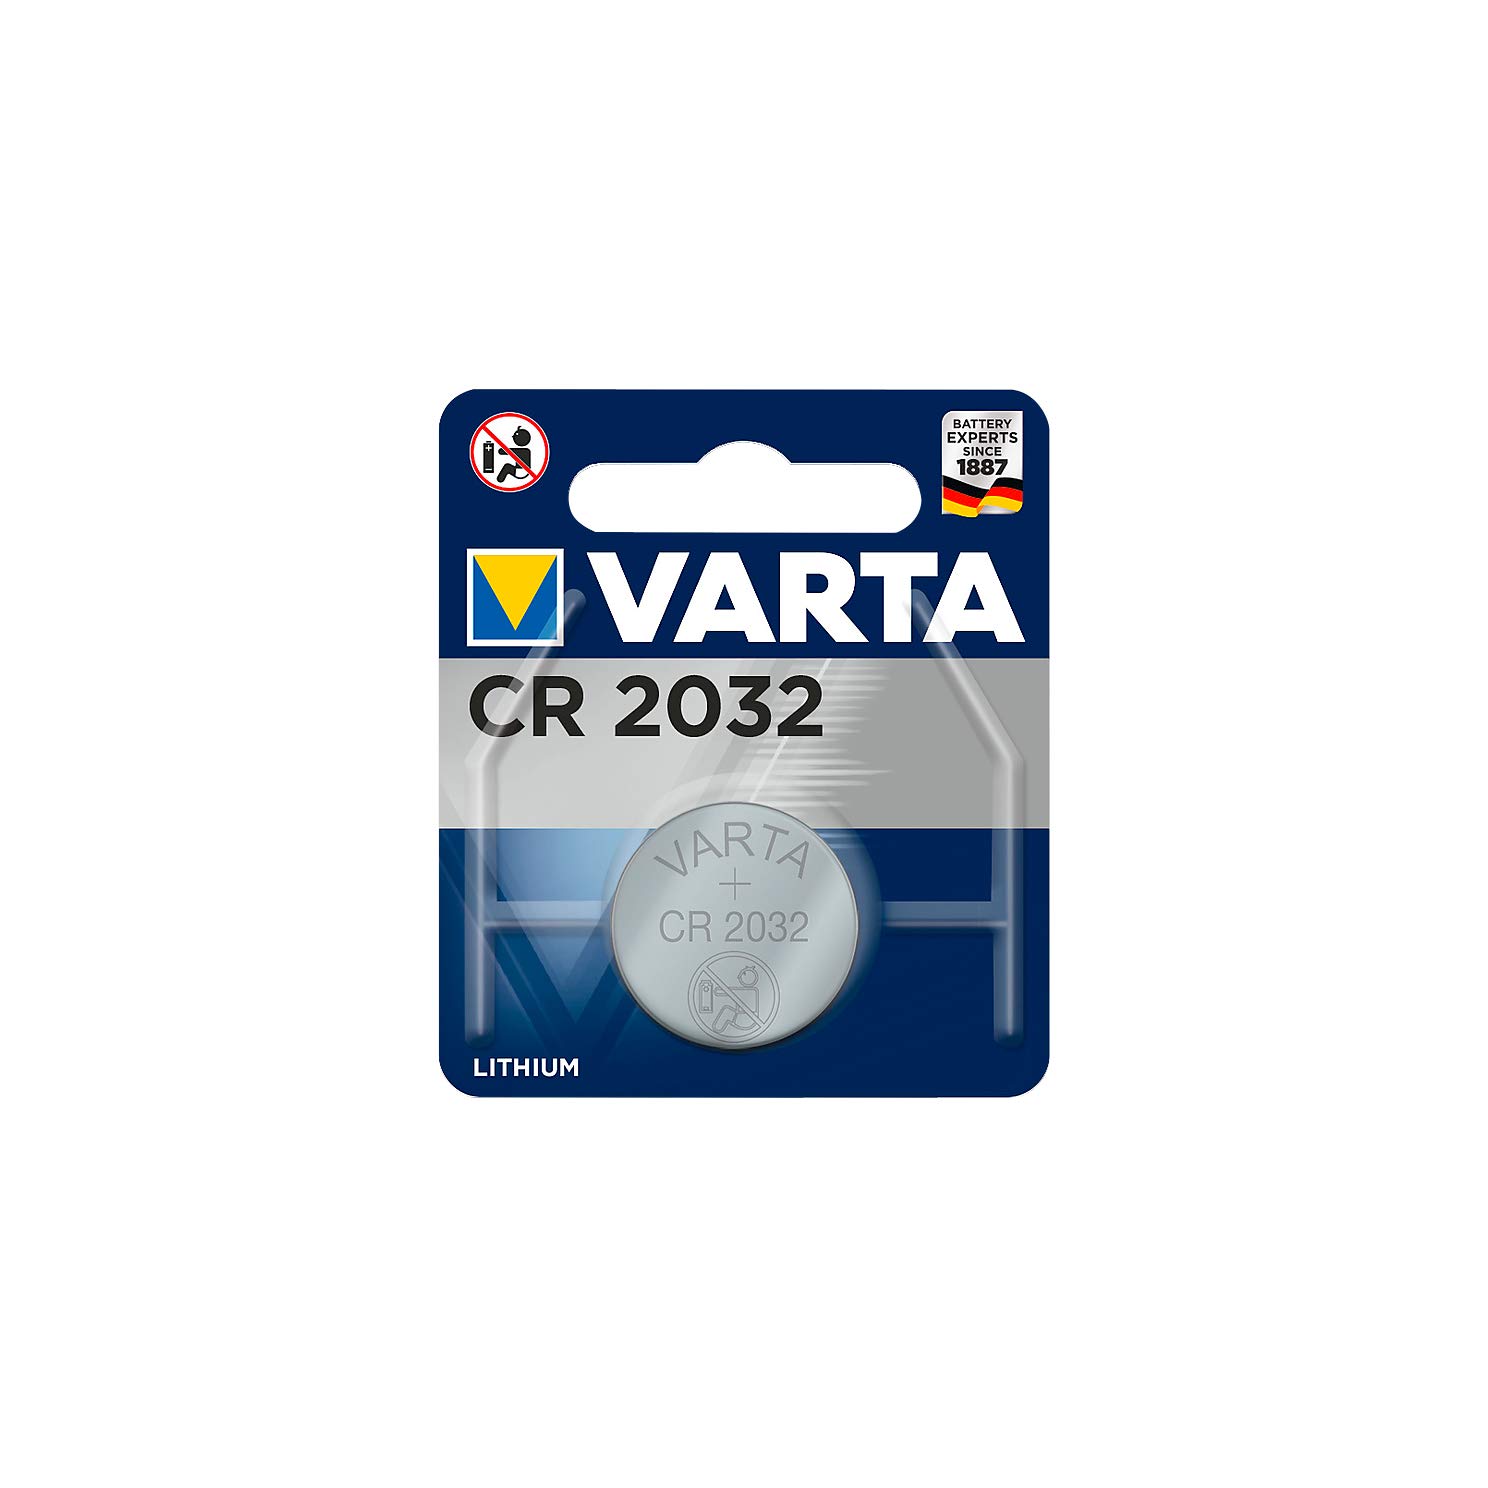 Lindemann CR2032 Varta Knopfbatterie Lithium Batterie, 3V von Varta